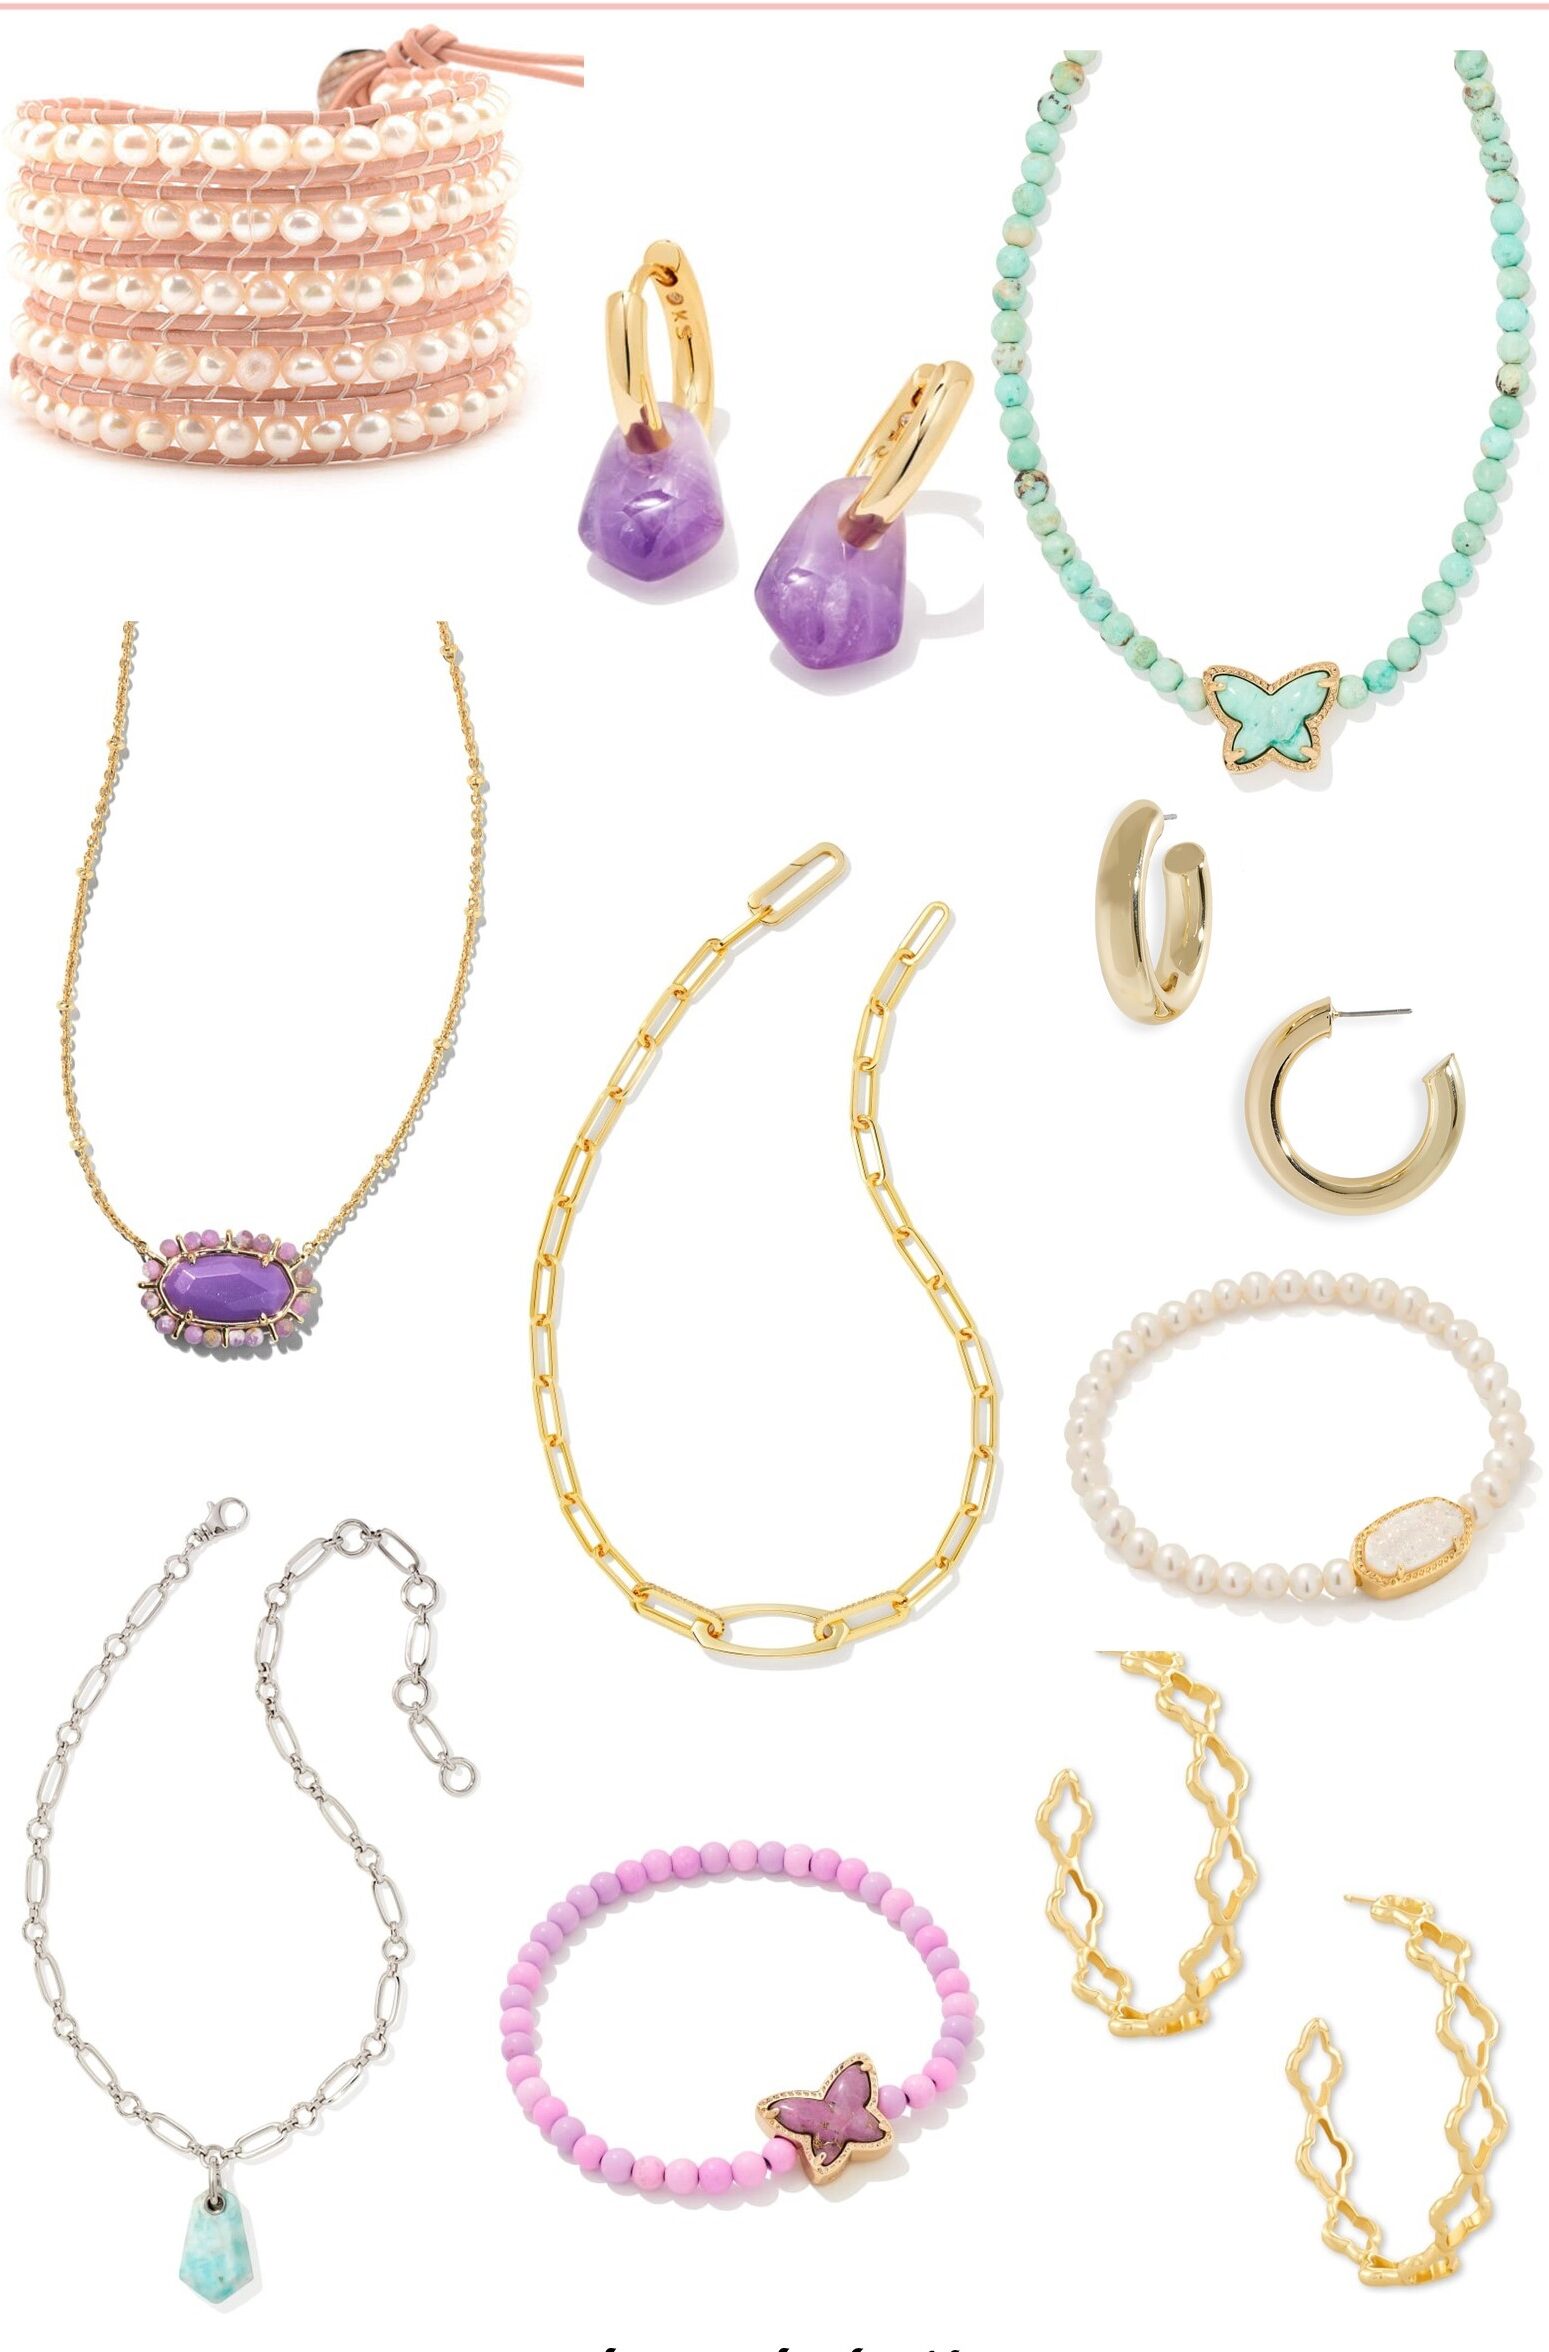 Spring Jewelry Styles